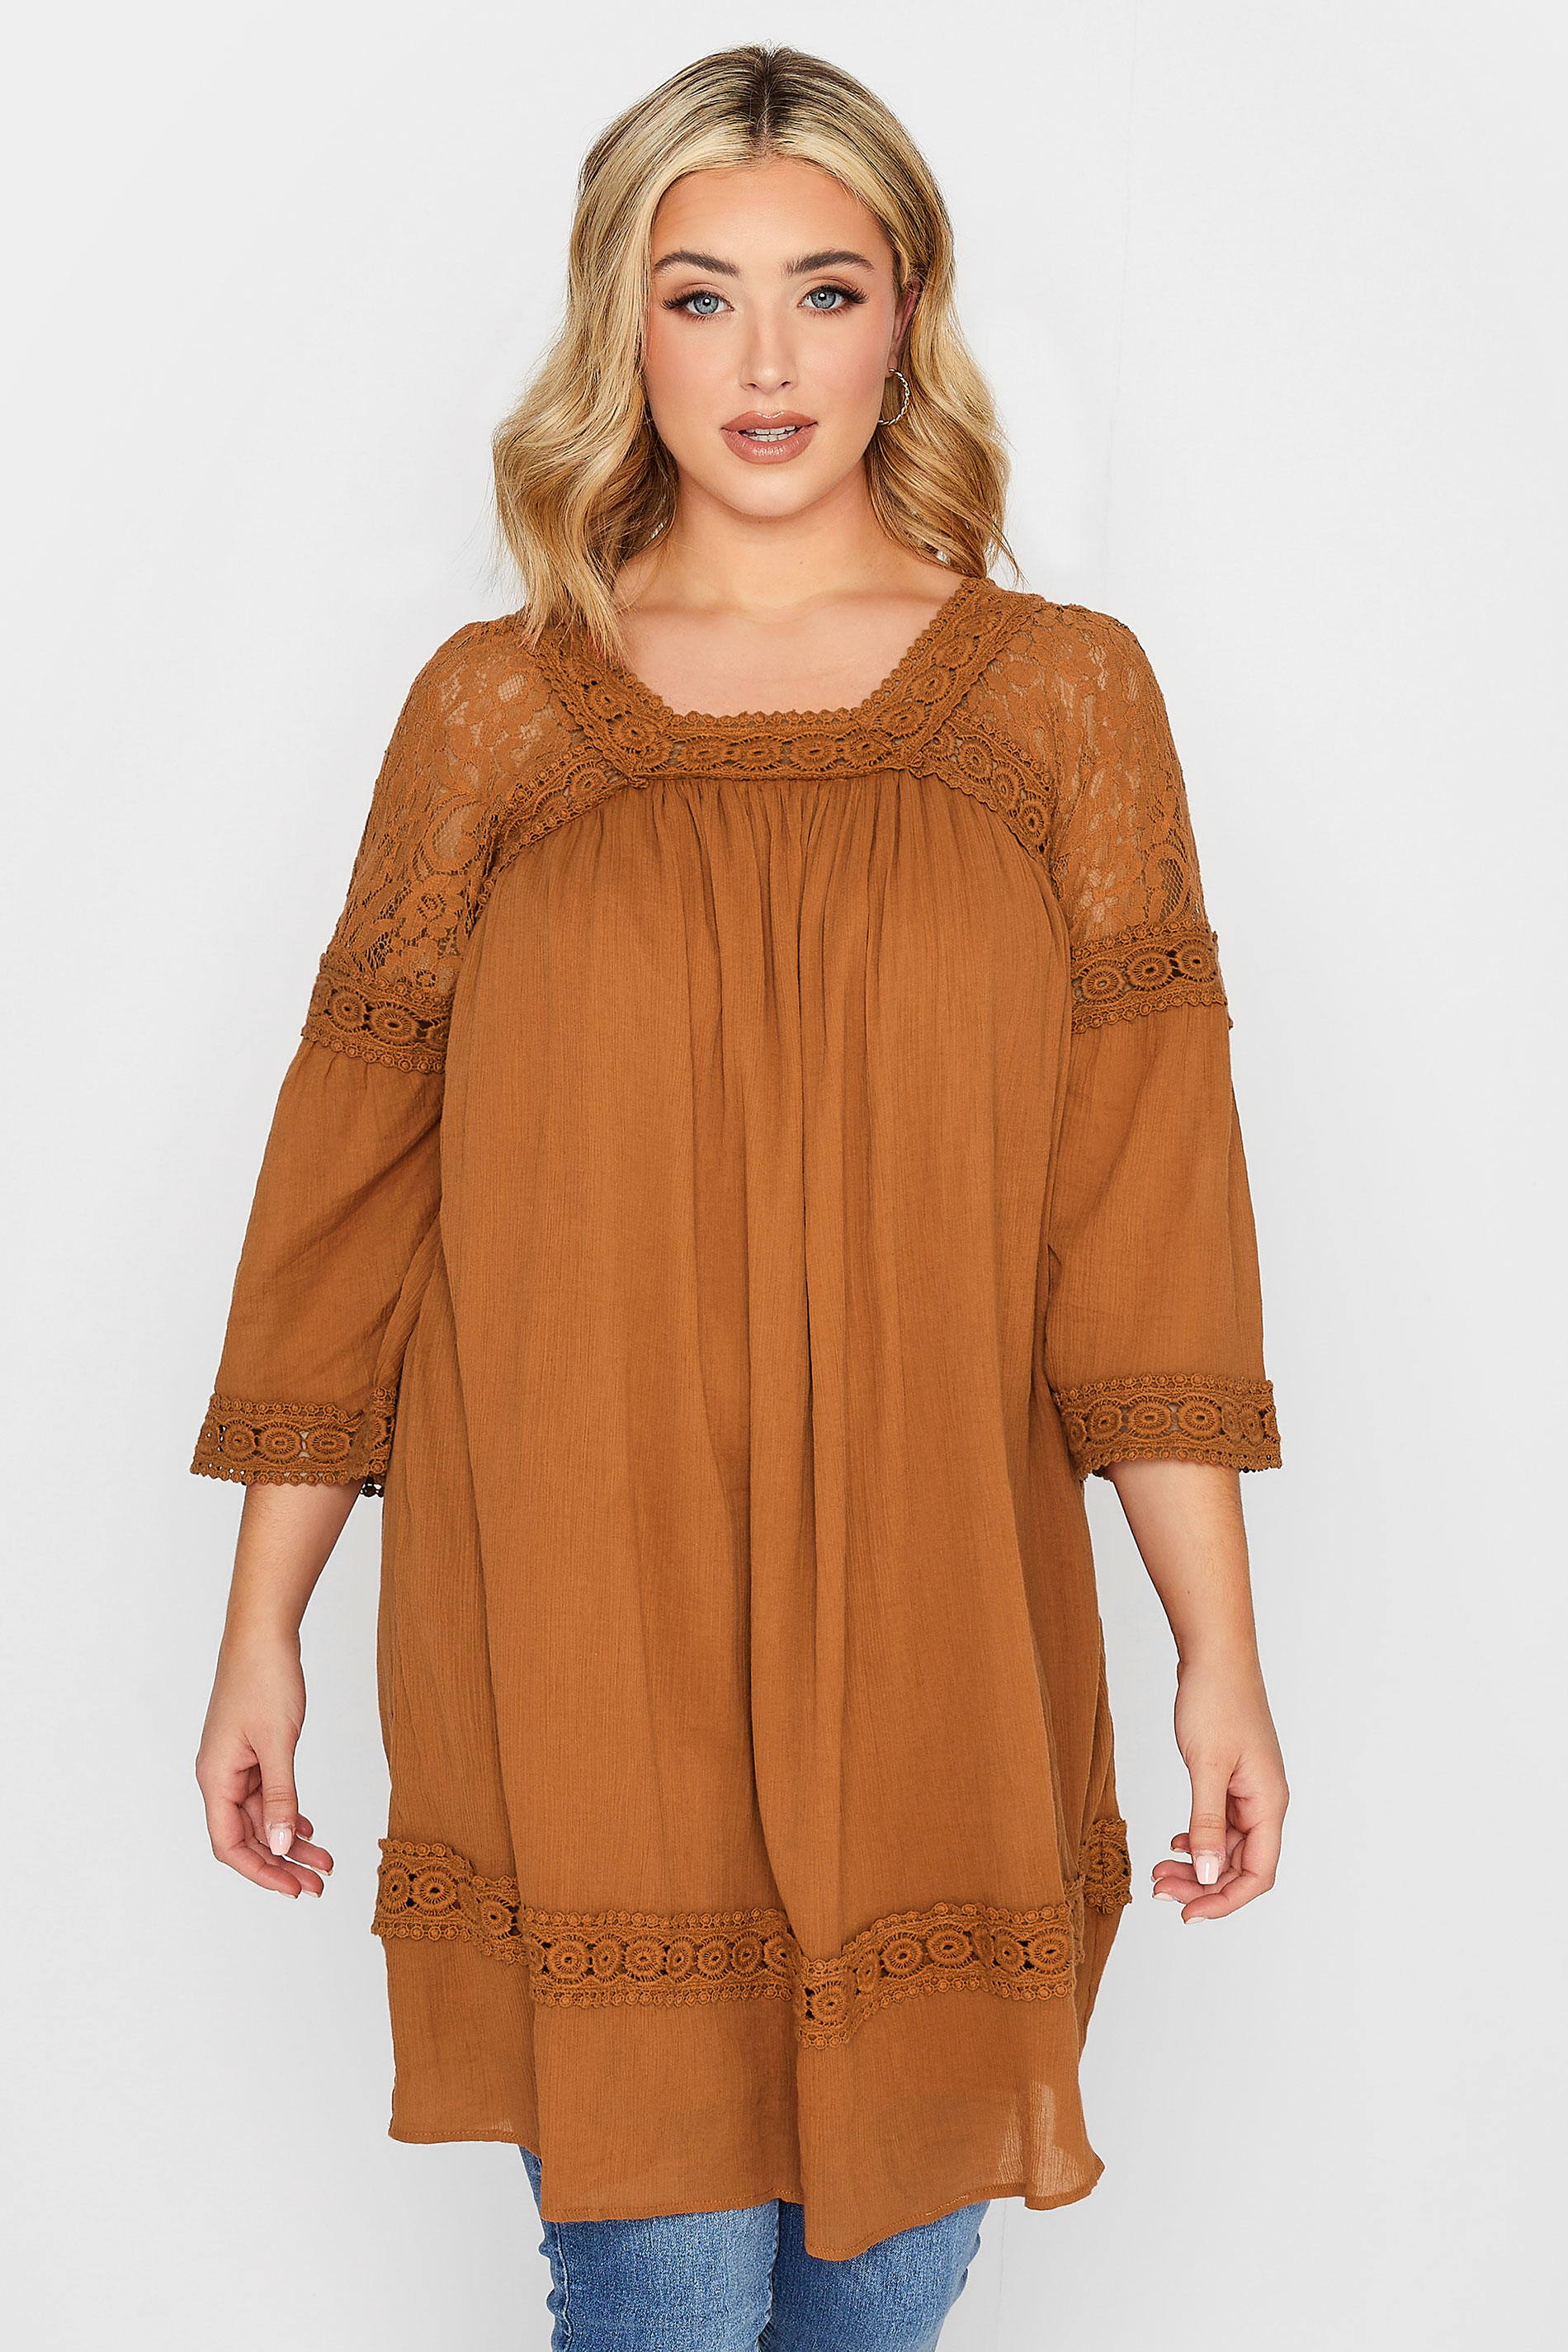 YOURS Curve Plus Size Orange Crochet Lace Tunic Blouse | Yours Clothing  1